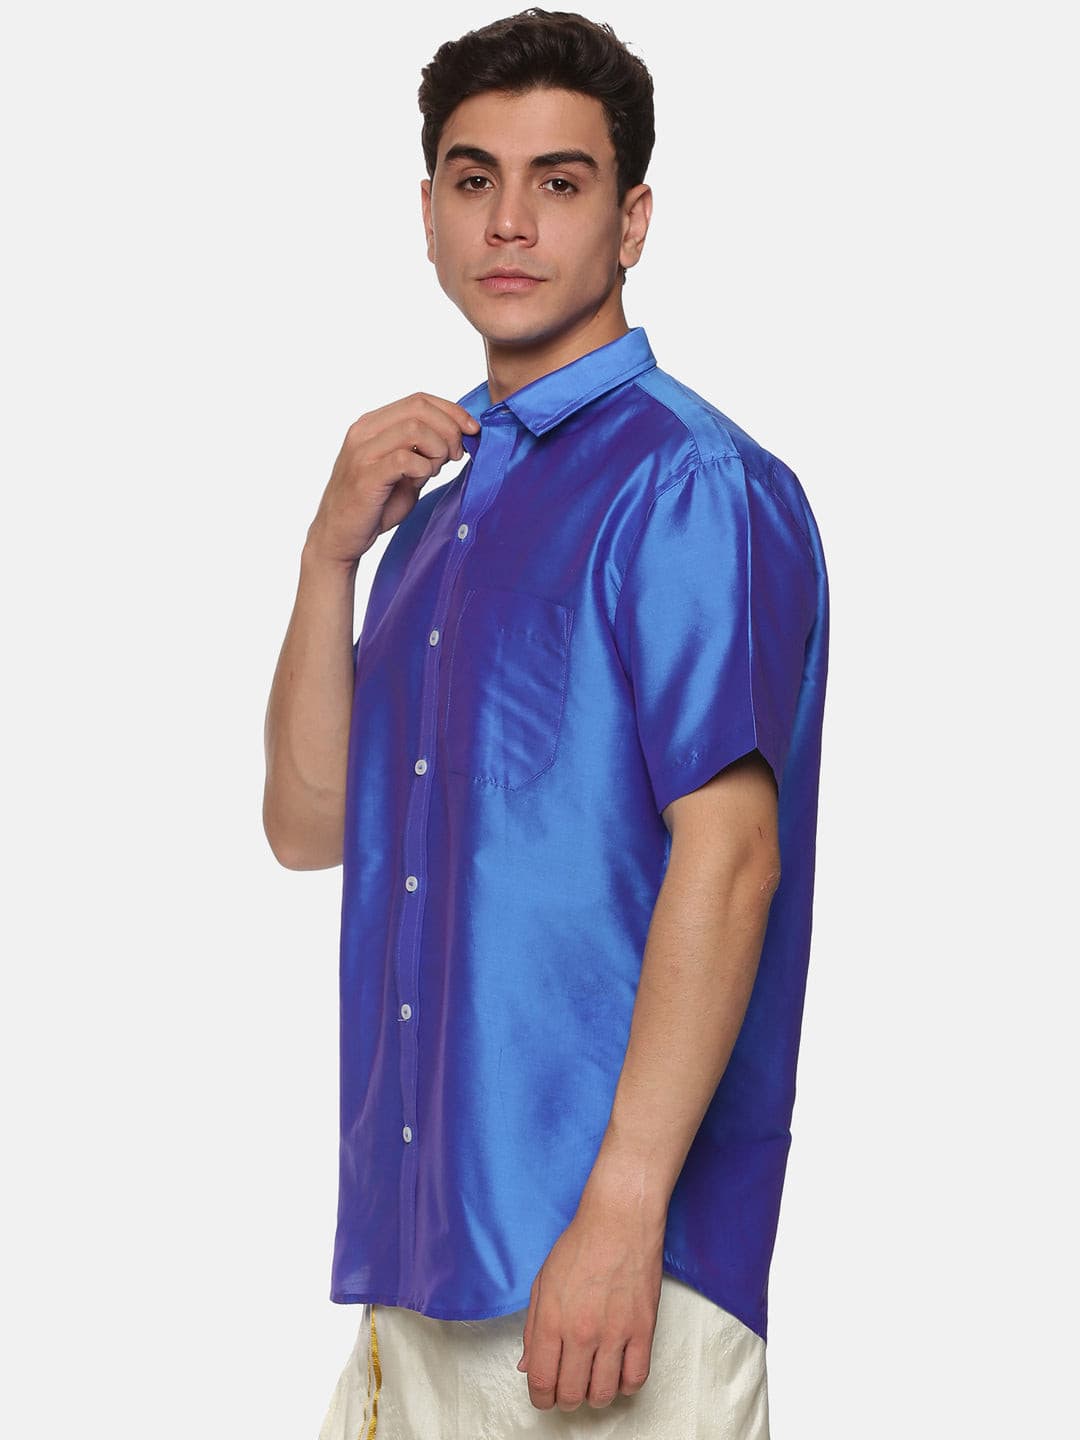 Men Blue Colour Half Sleeve Polyester Shirt.